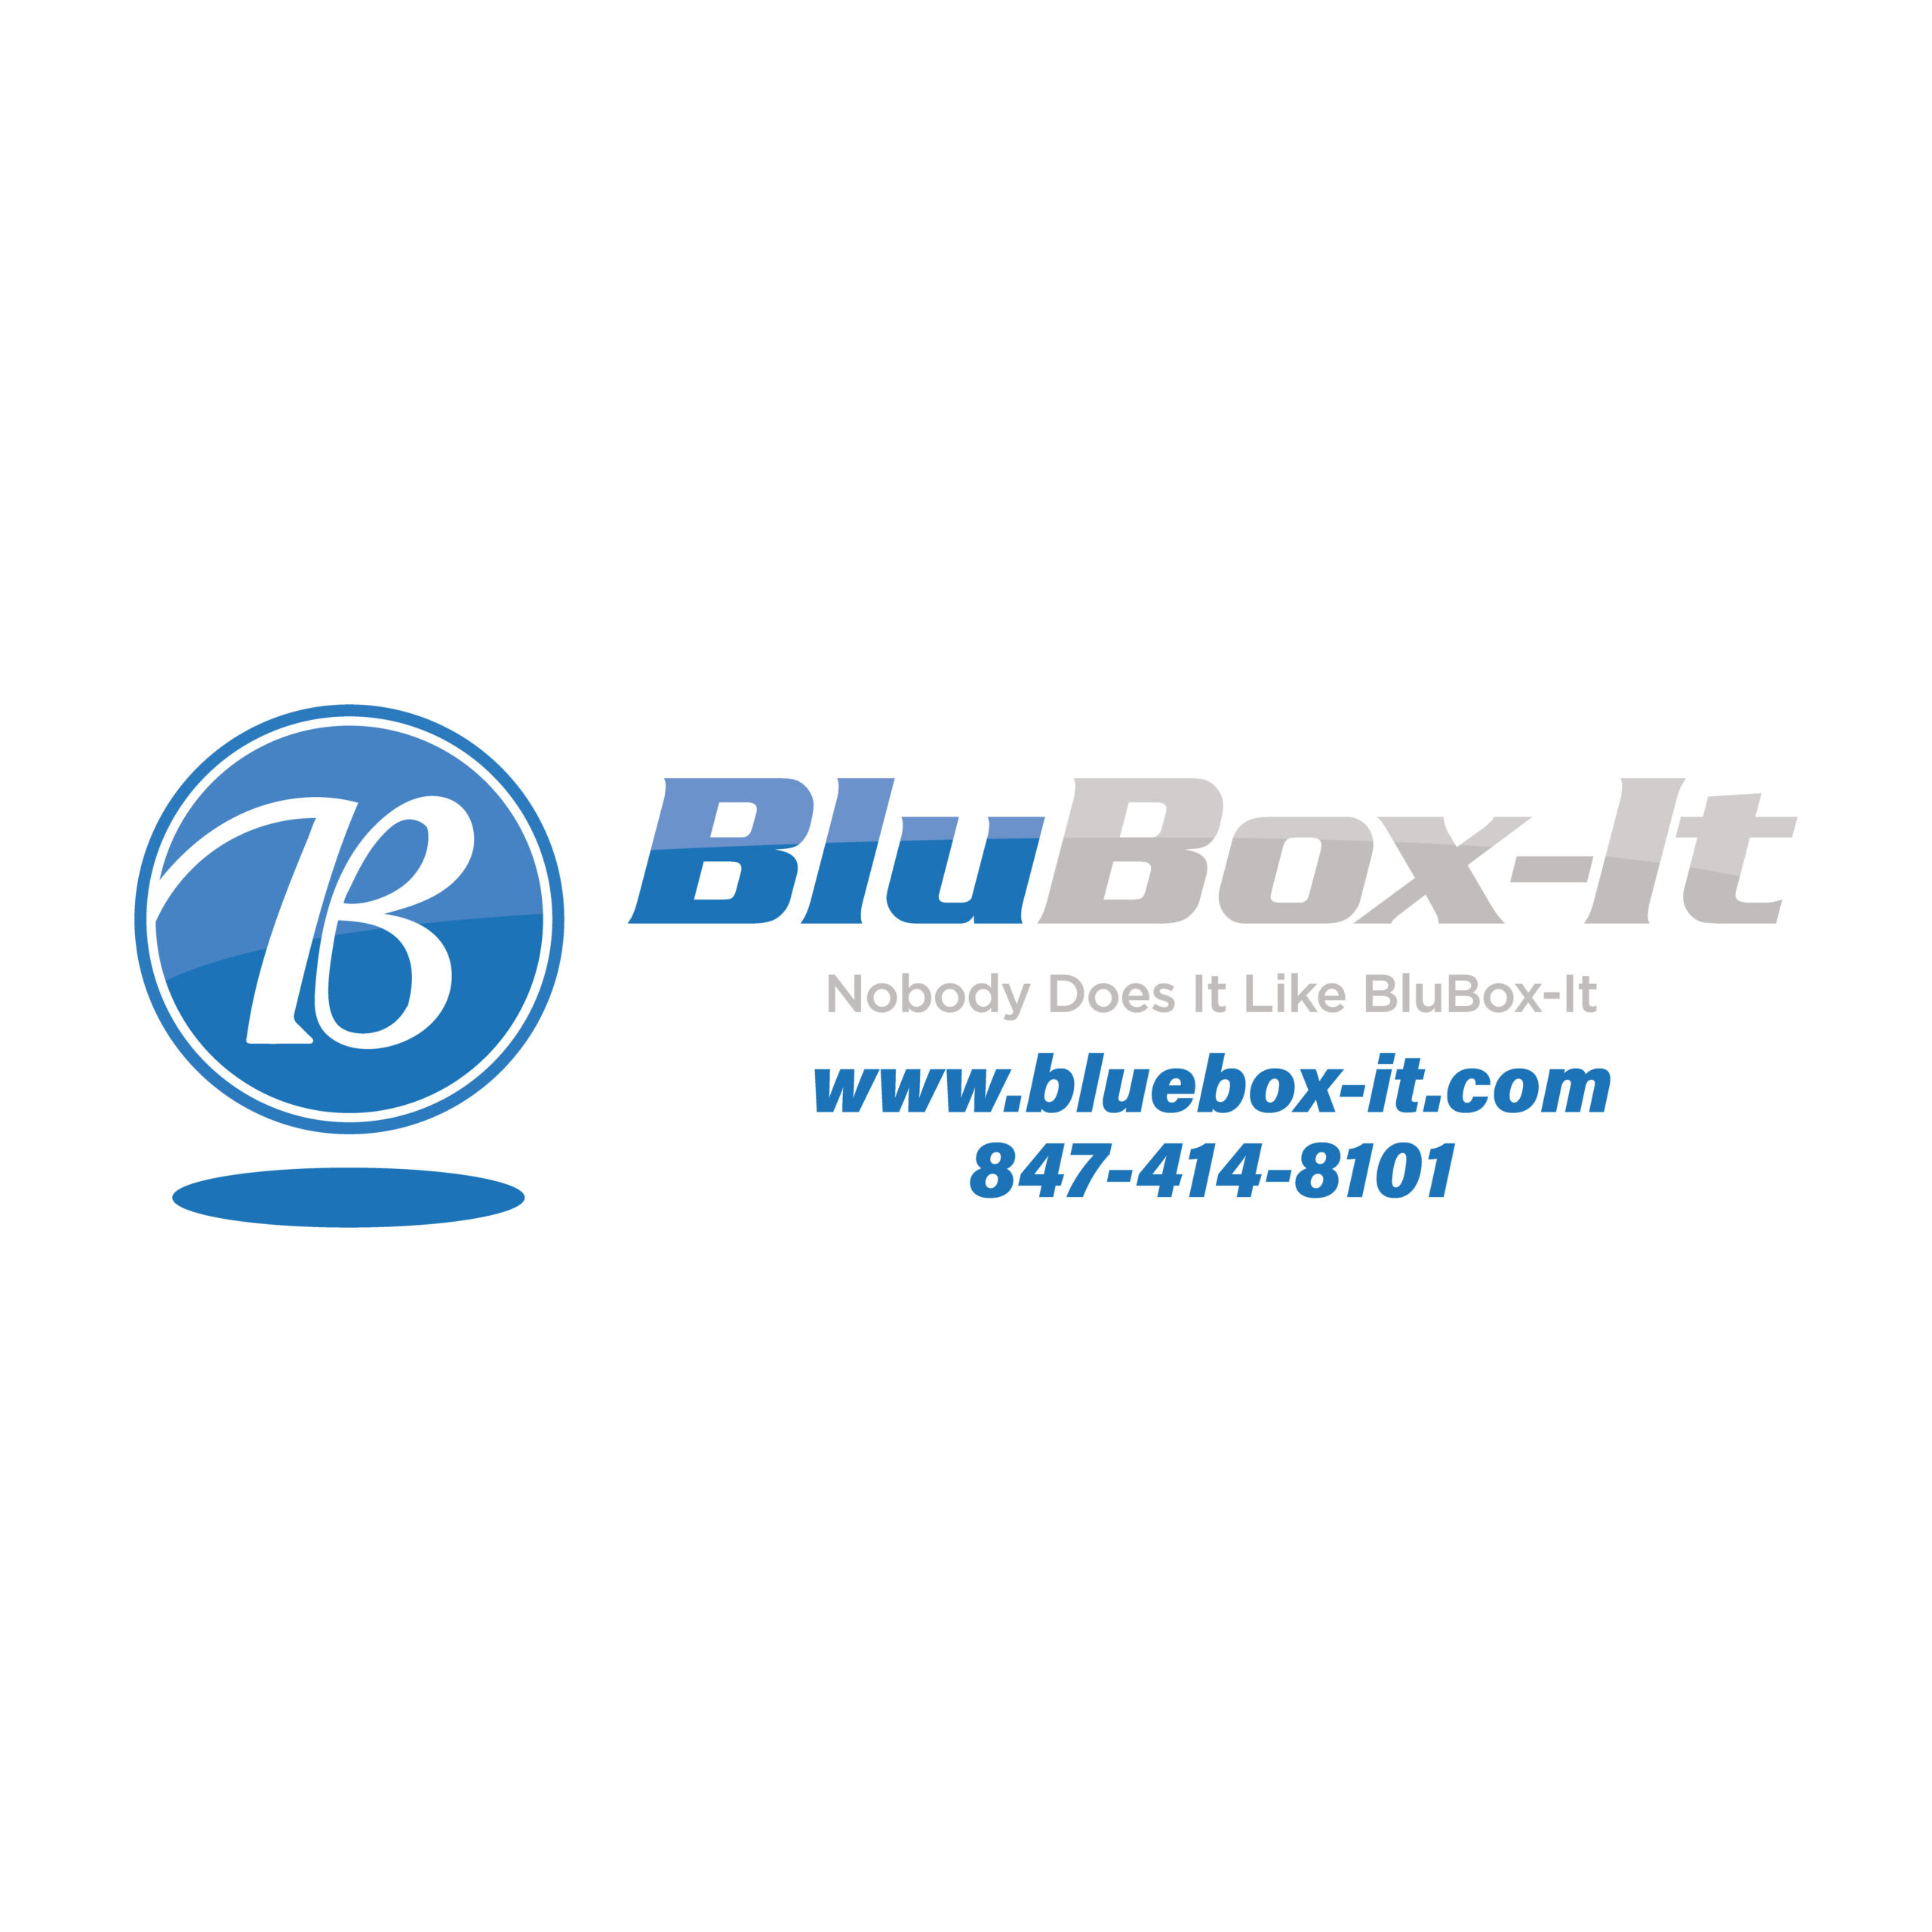 https://www.blubox-it.com/wp-content/uploads/2022/06/BluBox-it1-scaled.jpg